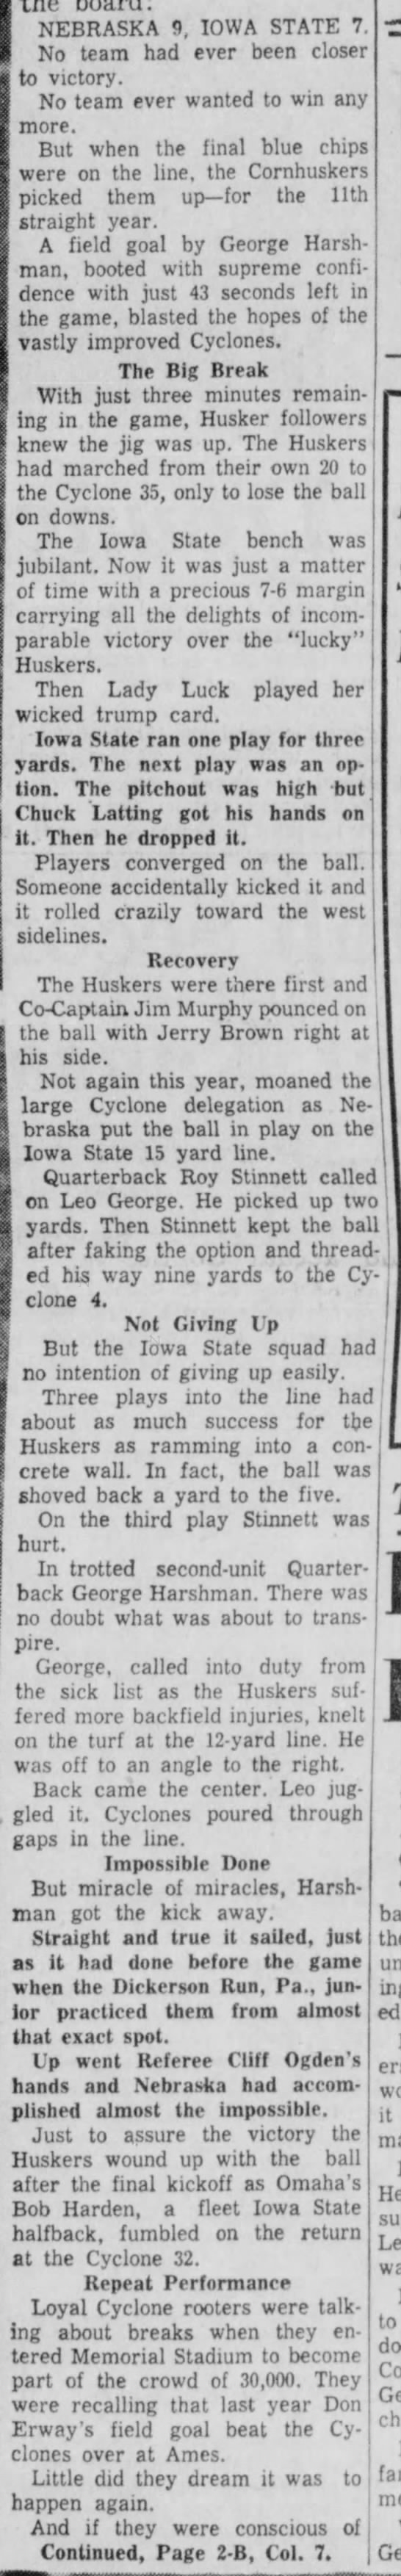 1956 Nebraska-Iowa State, part 2 - 